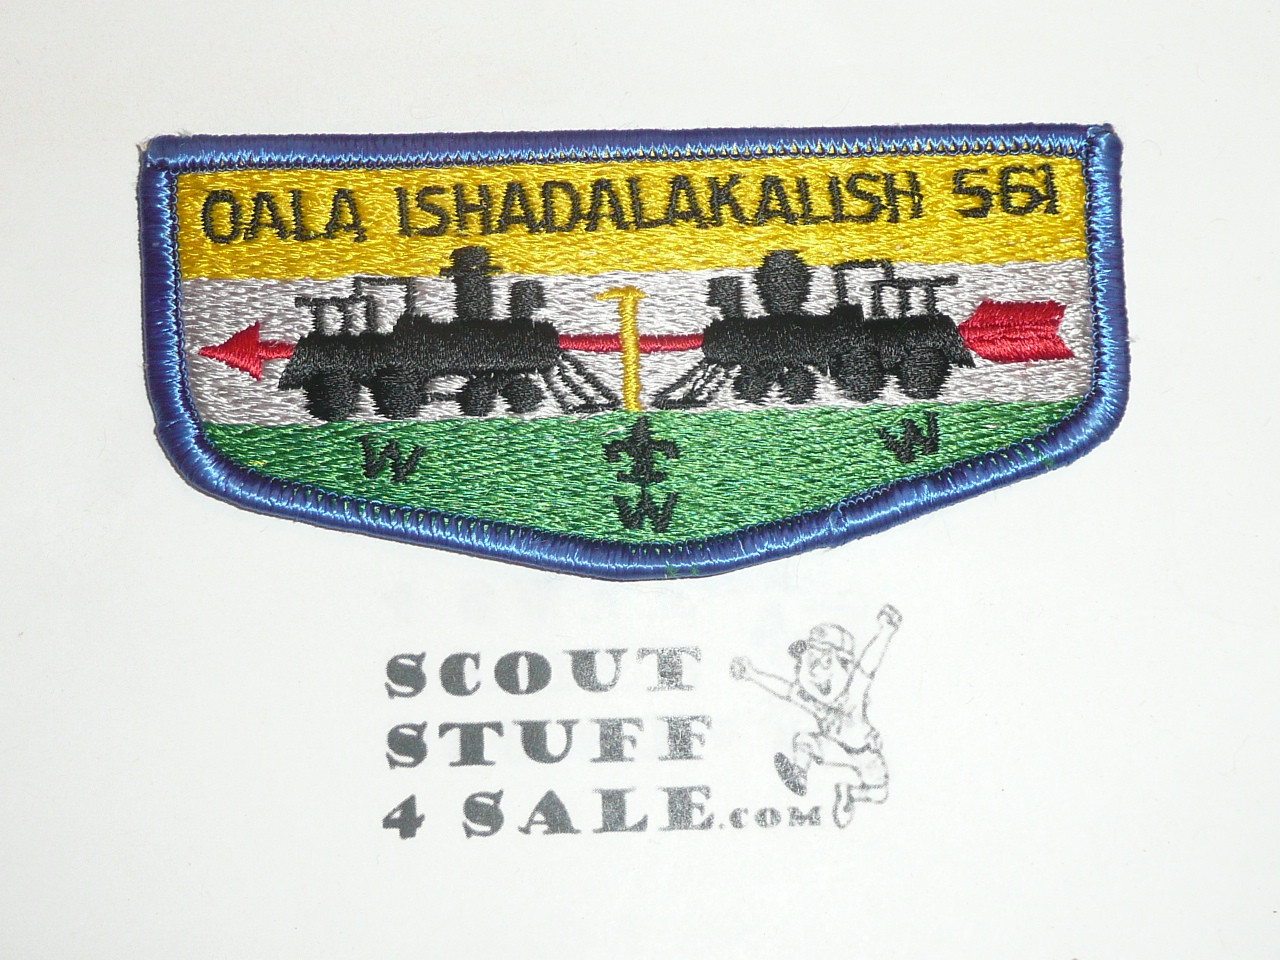 Order of the Arrow Lodge #561 Oala Ishadalakalish s8 Flap Patch